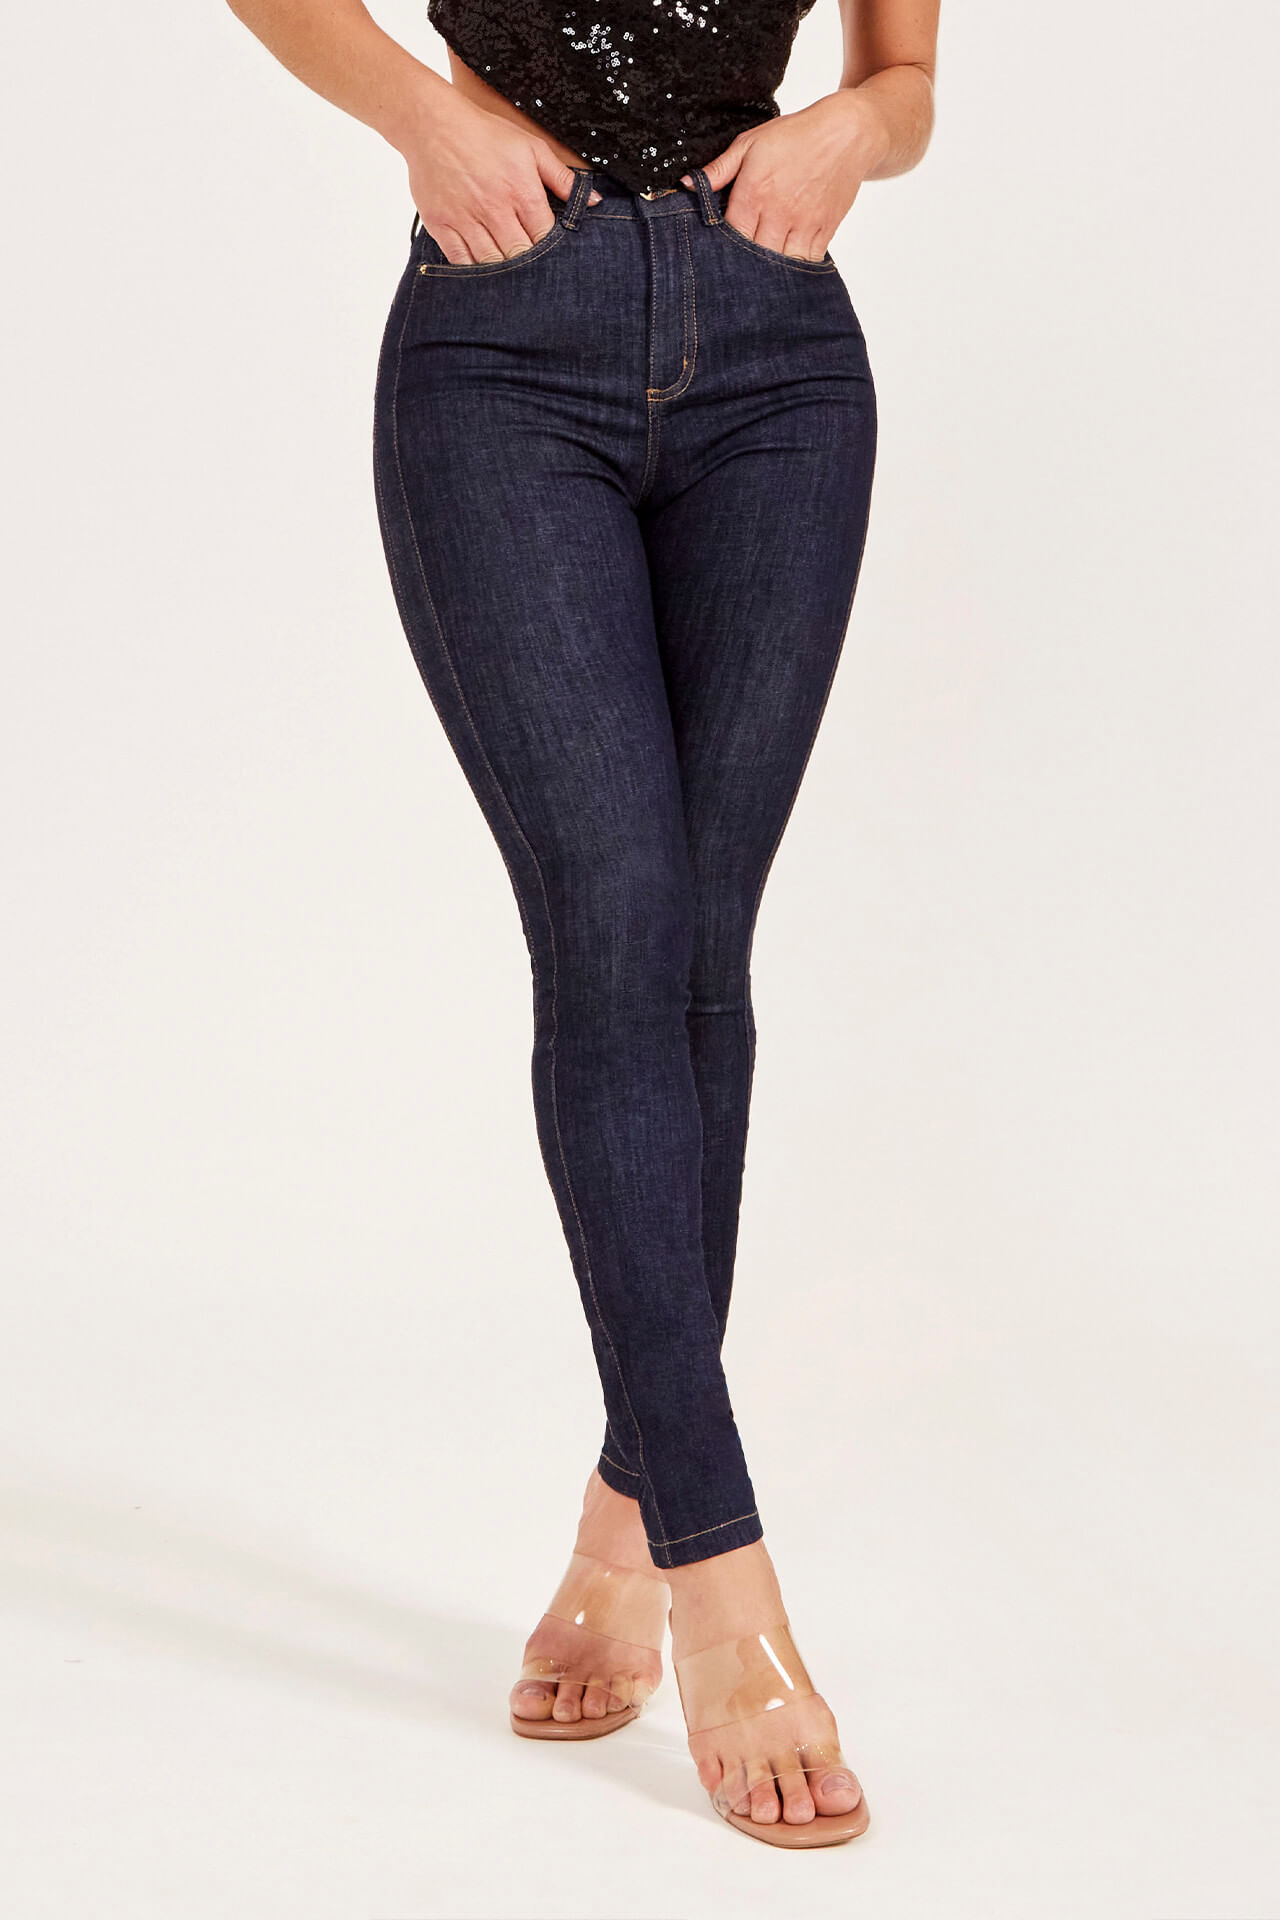 Calça Jeans Ultra Modeladora Mega Bumbum Fantástica - Modab